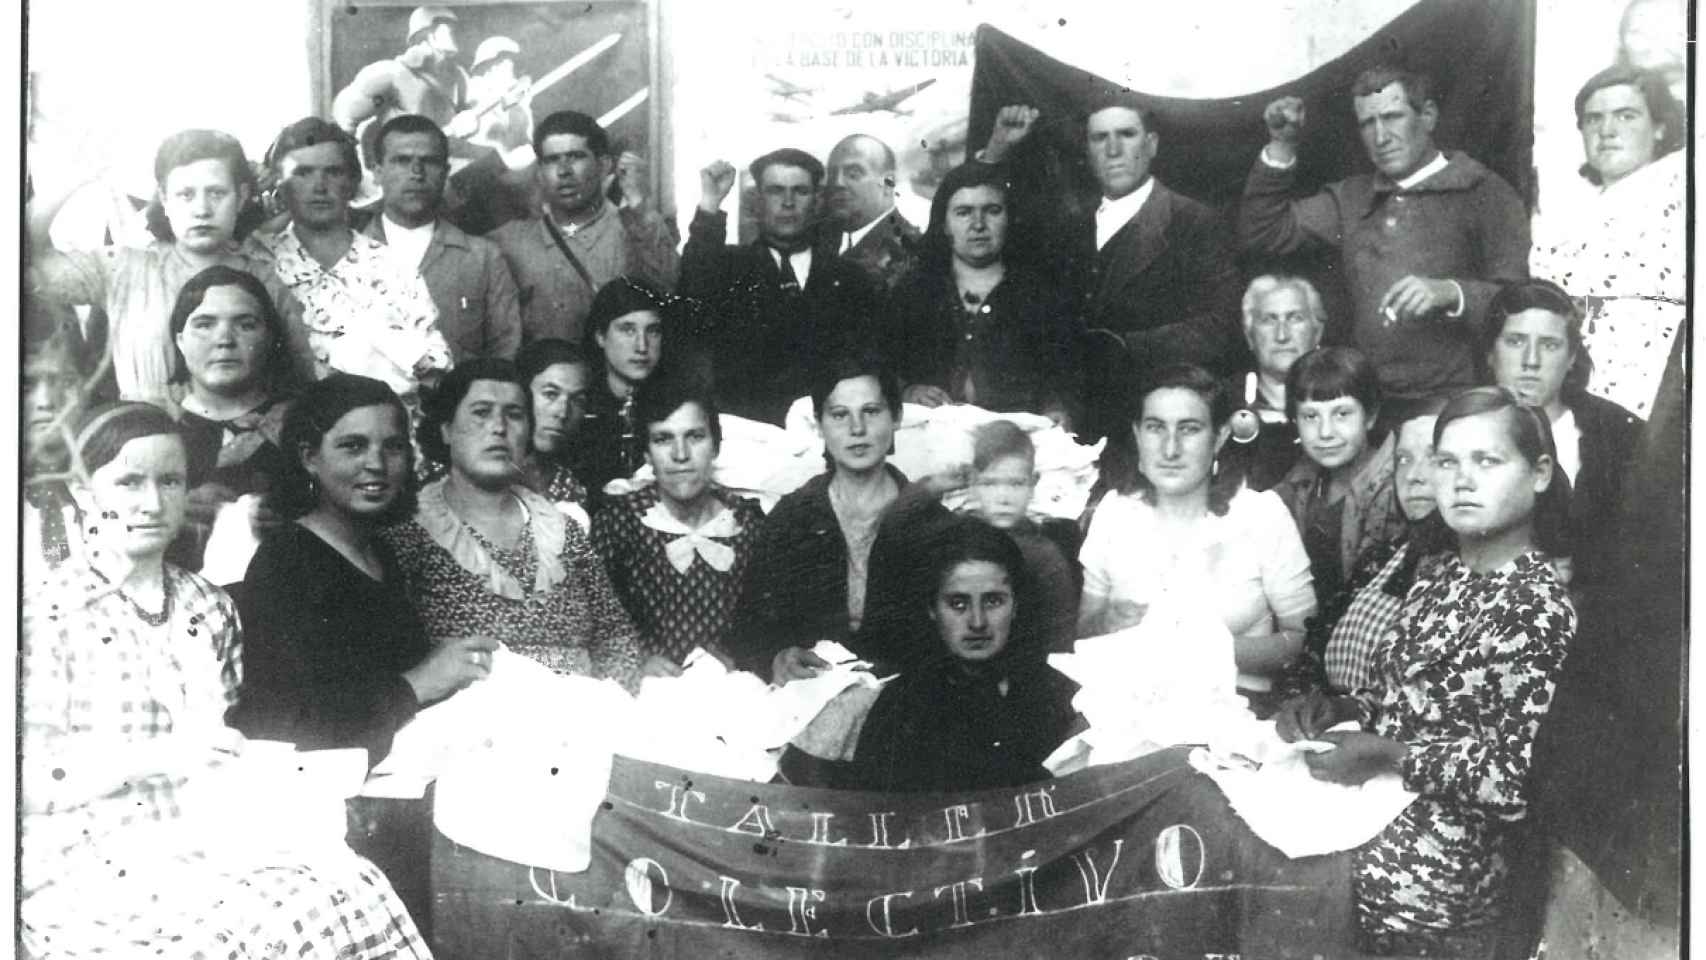 Taller colectivo del Partido Comunista de Villalgordo, 1938.